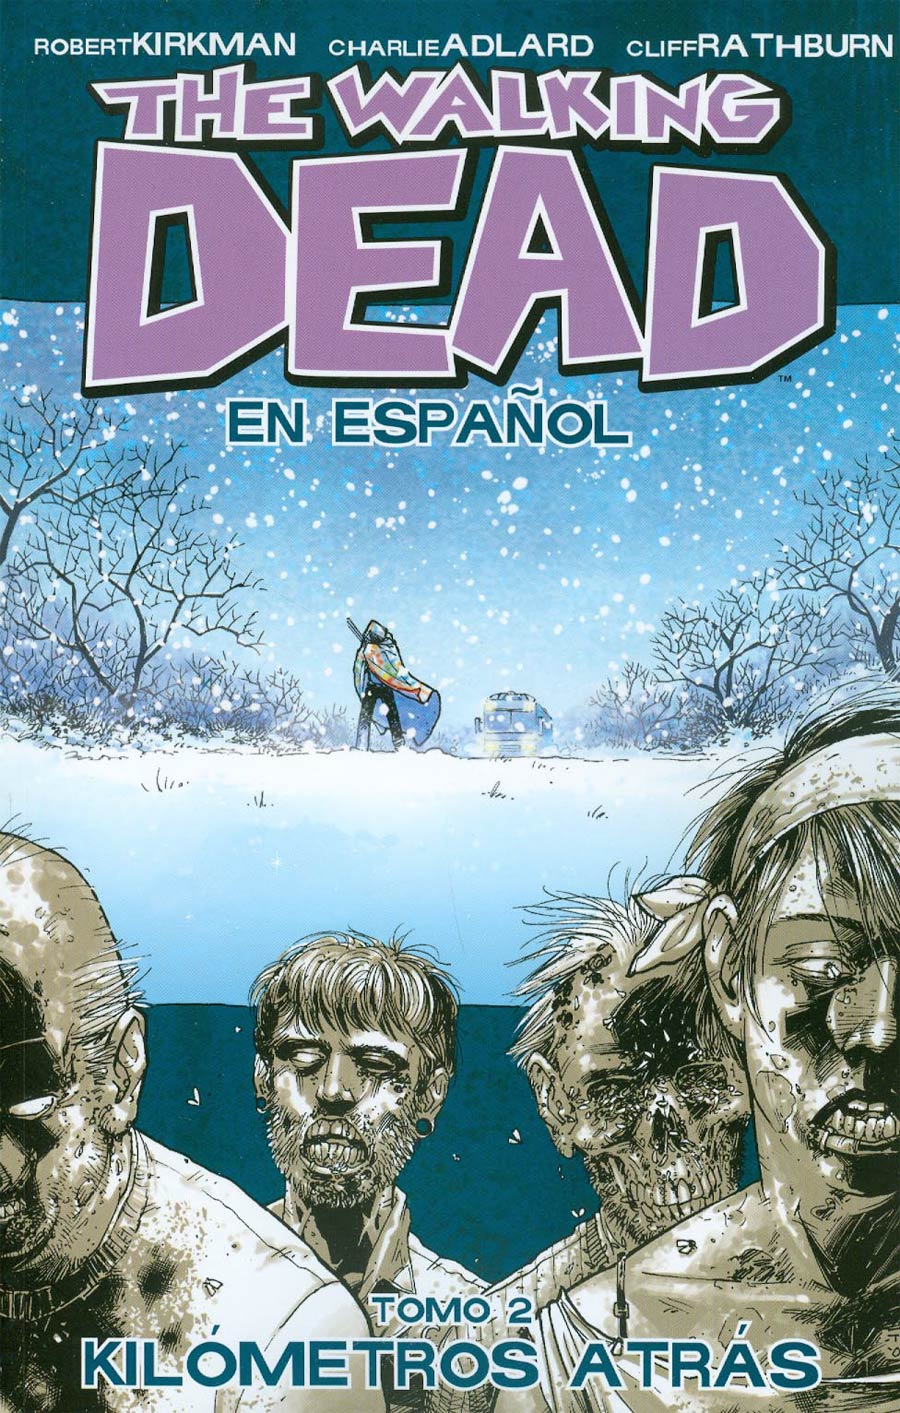 Walking Dead En Espanol Vol 2 Kilometros Atras TP